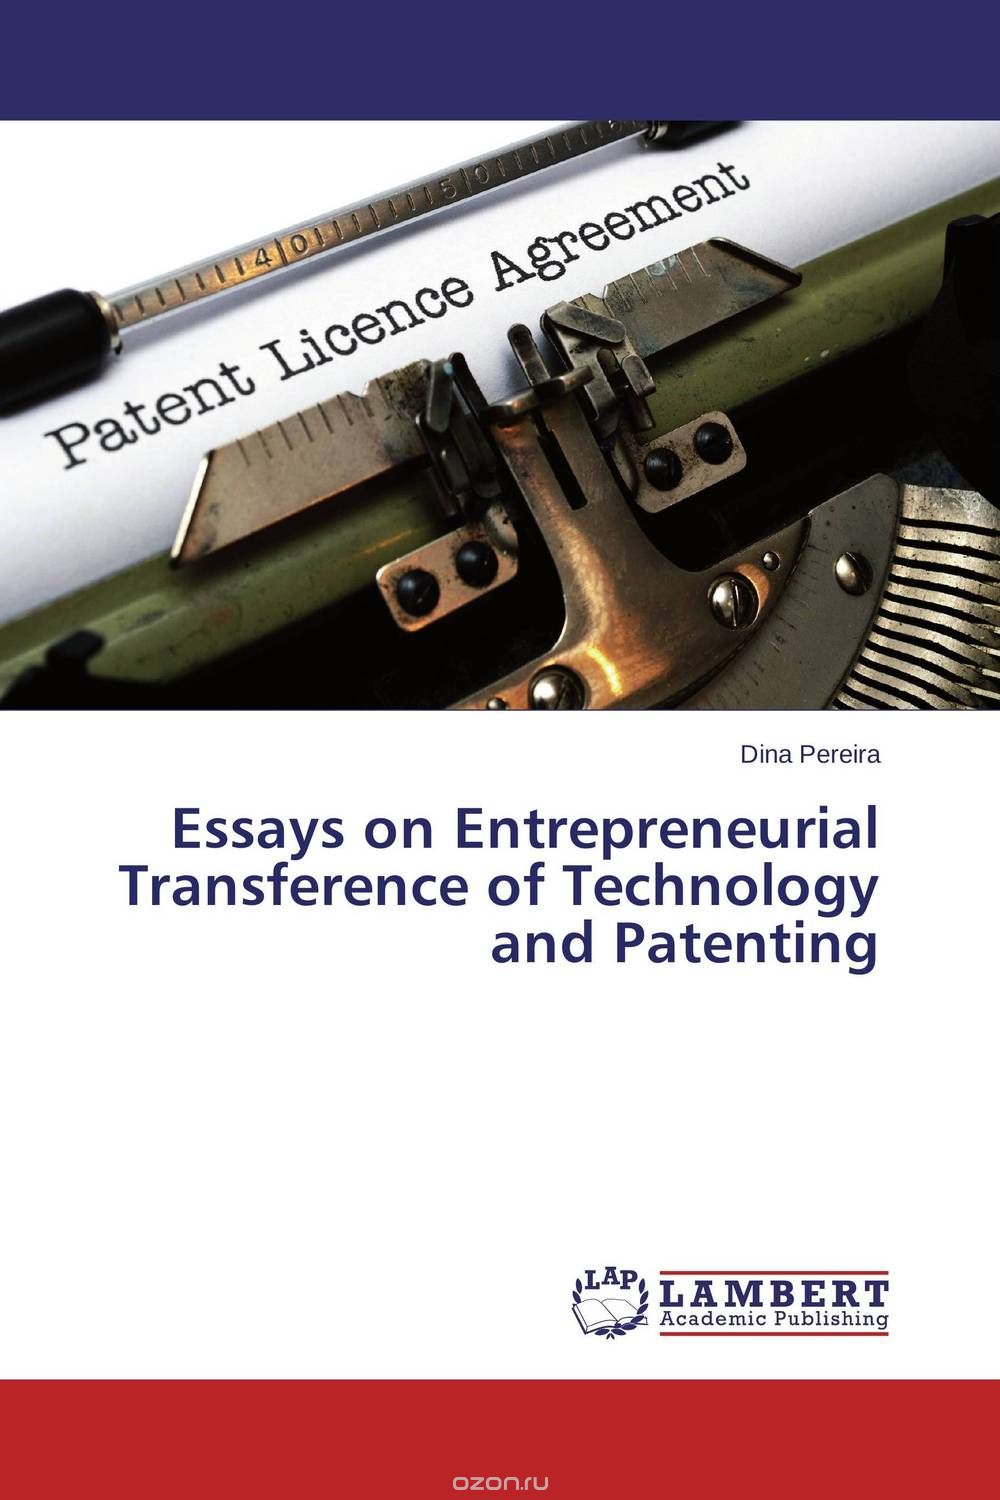 Скачать книгу "Essays on Entrepreneurial Transference of Technology and Patenting"